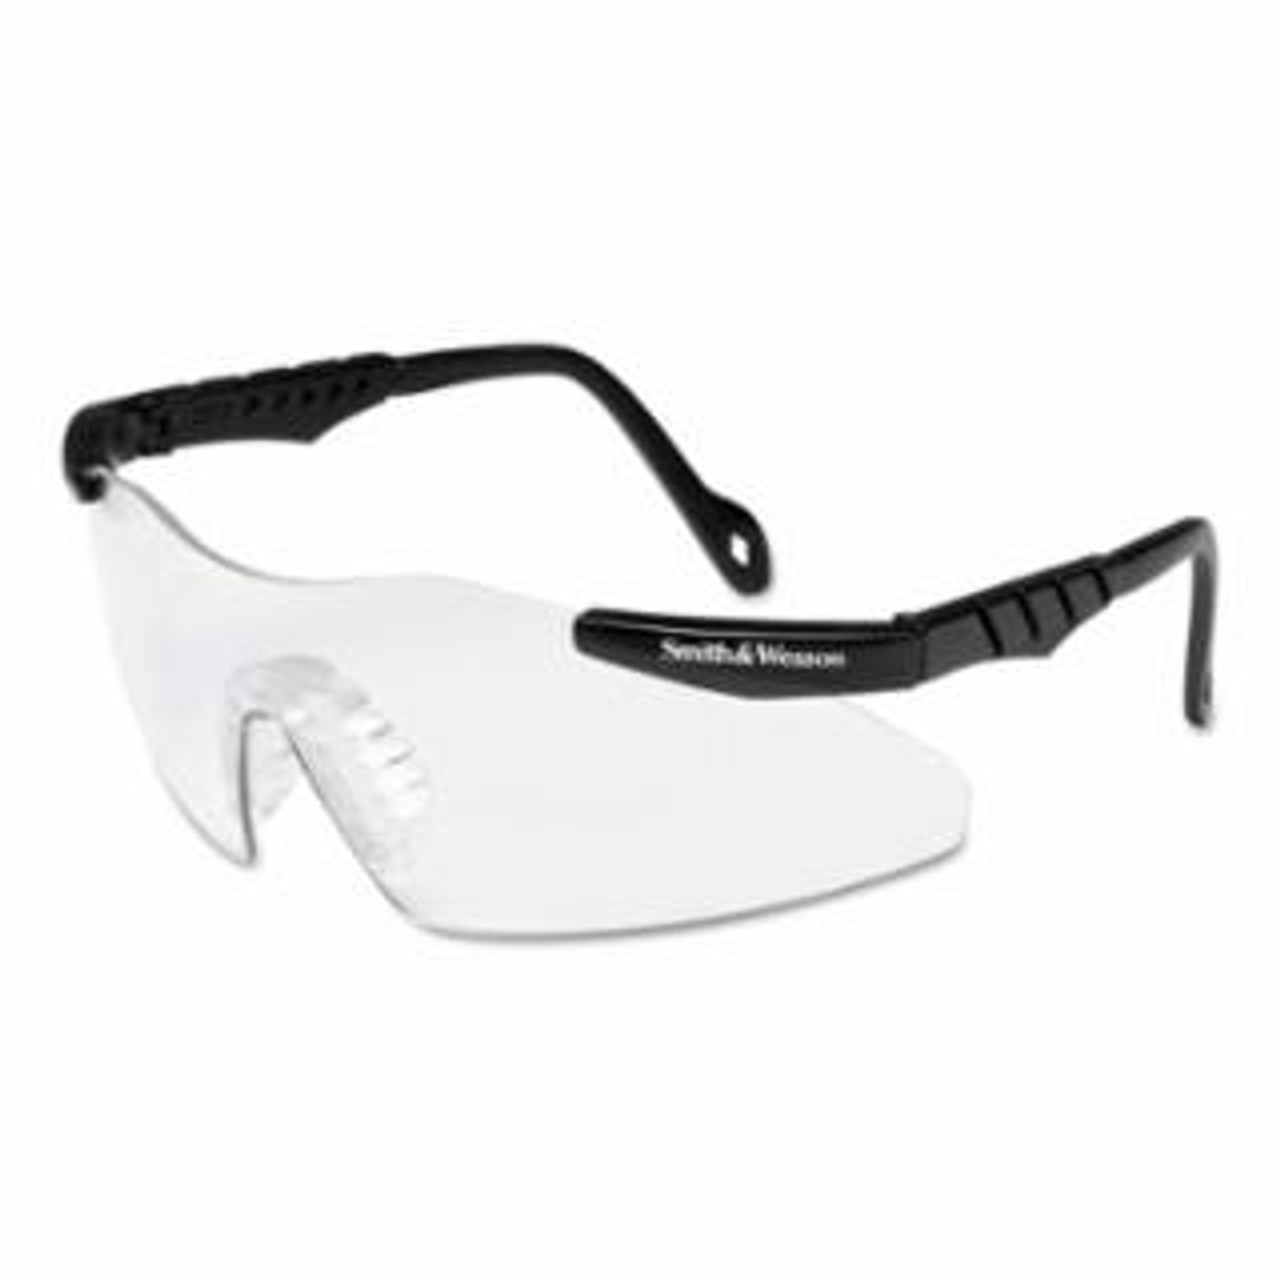 Smith And Wesson Sandw Magnum 3g Safety Glasses Mini Black Frame C Ims Bolt